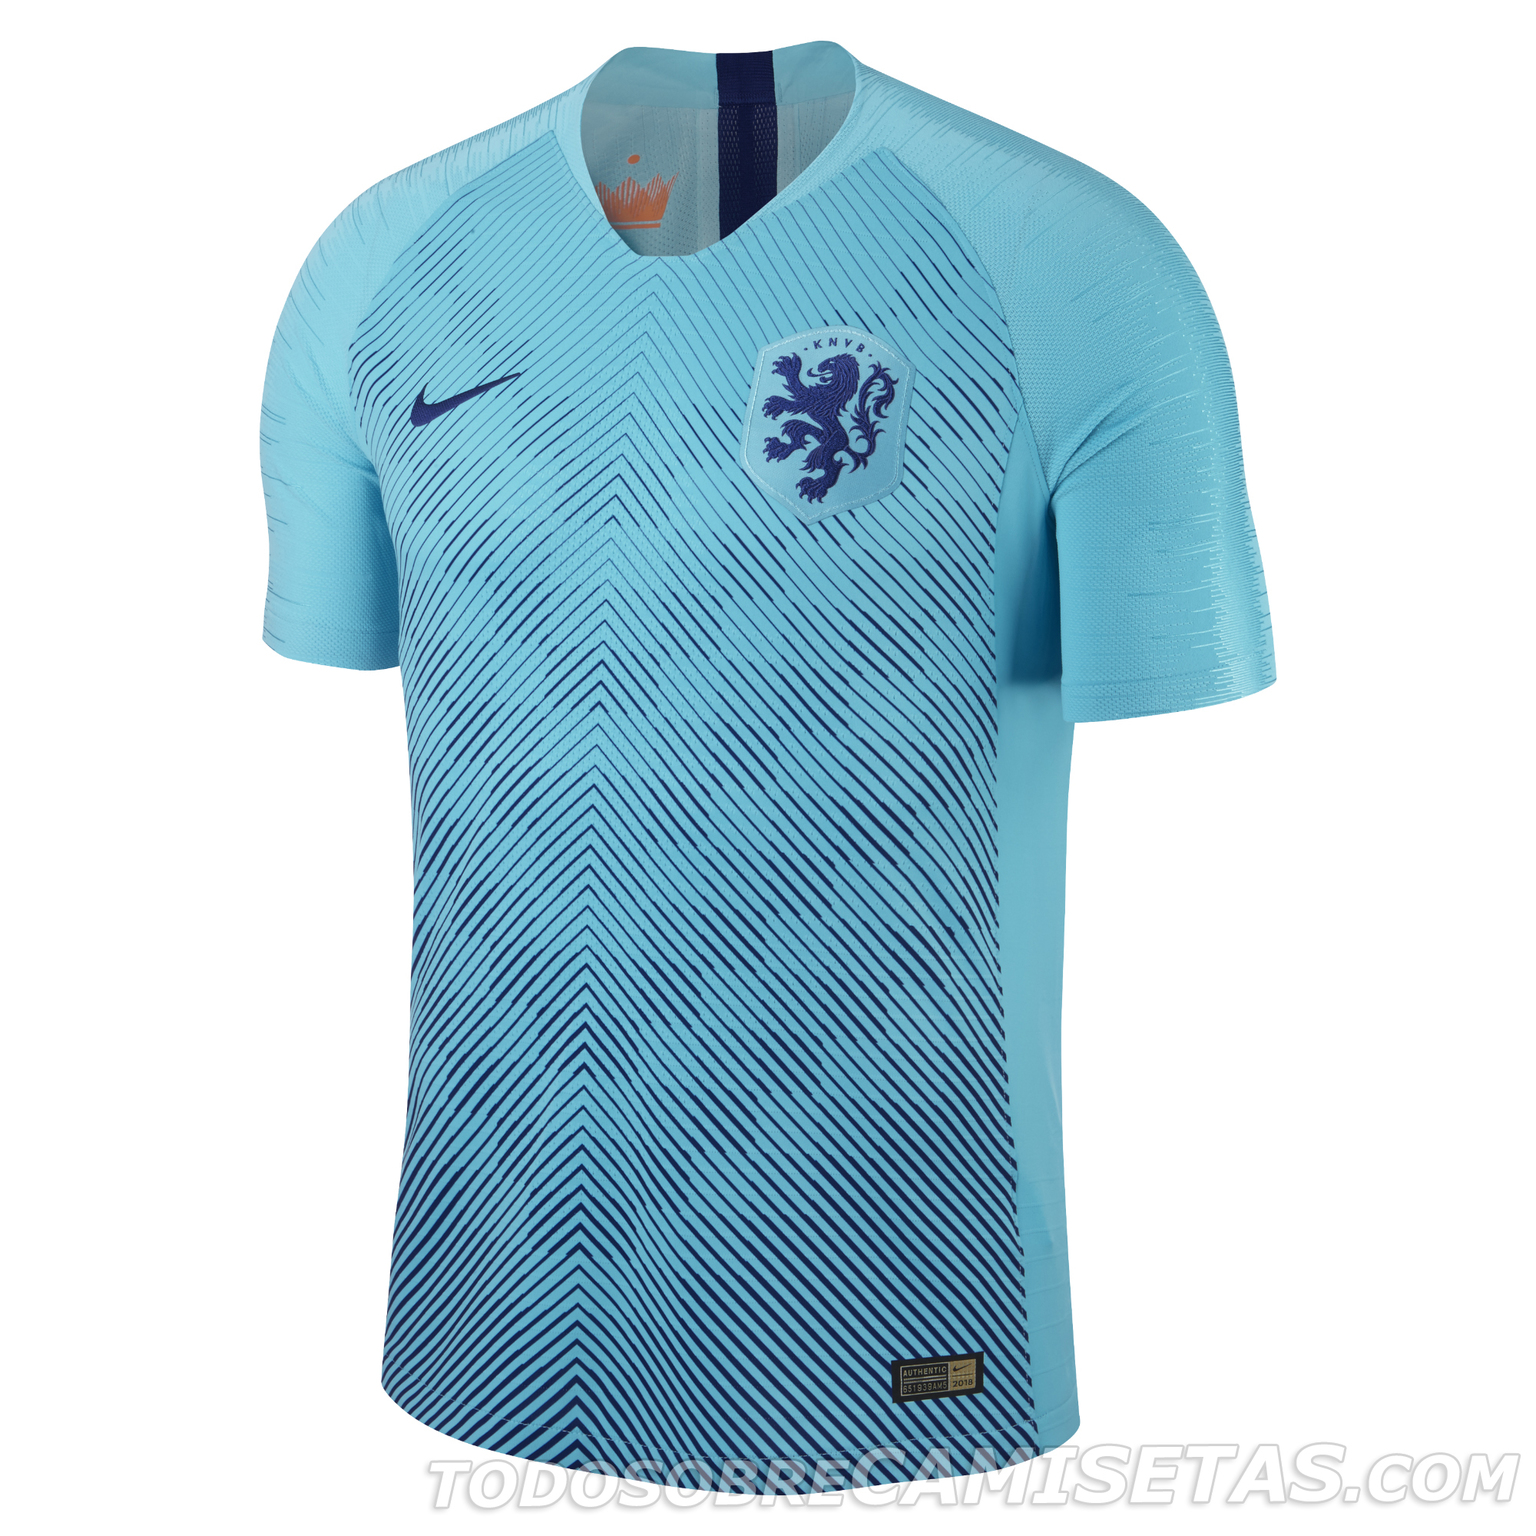 Netherlands Nike - Todo Sobre Camisetas